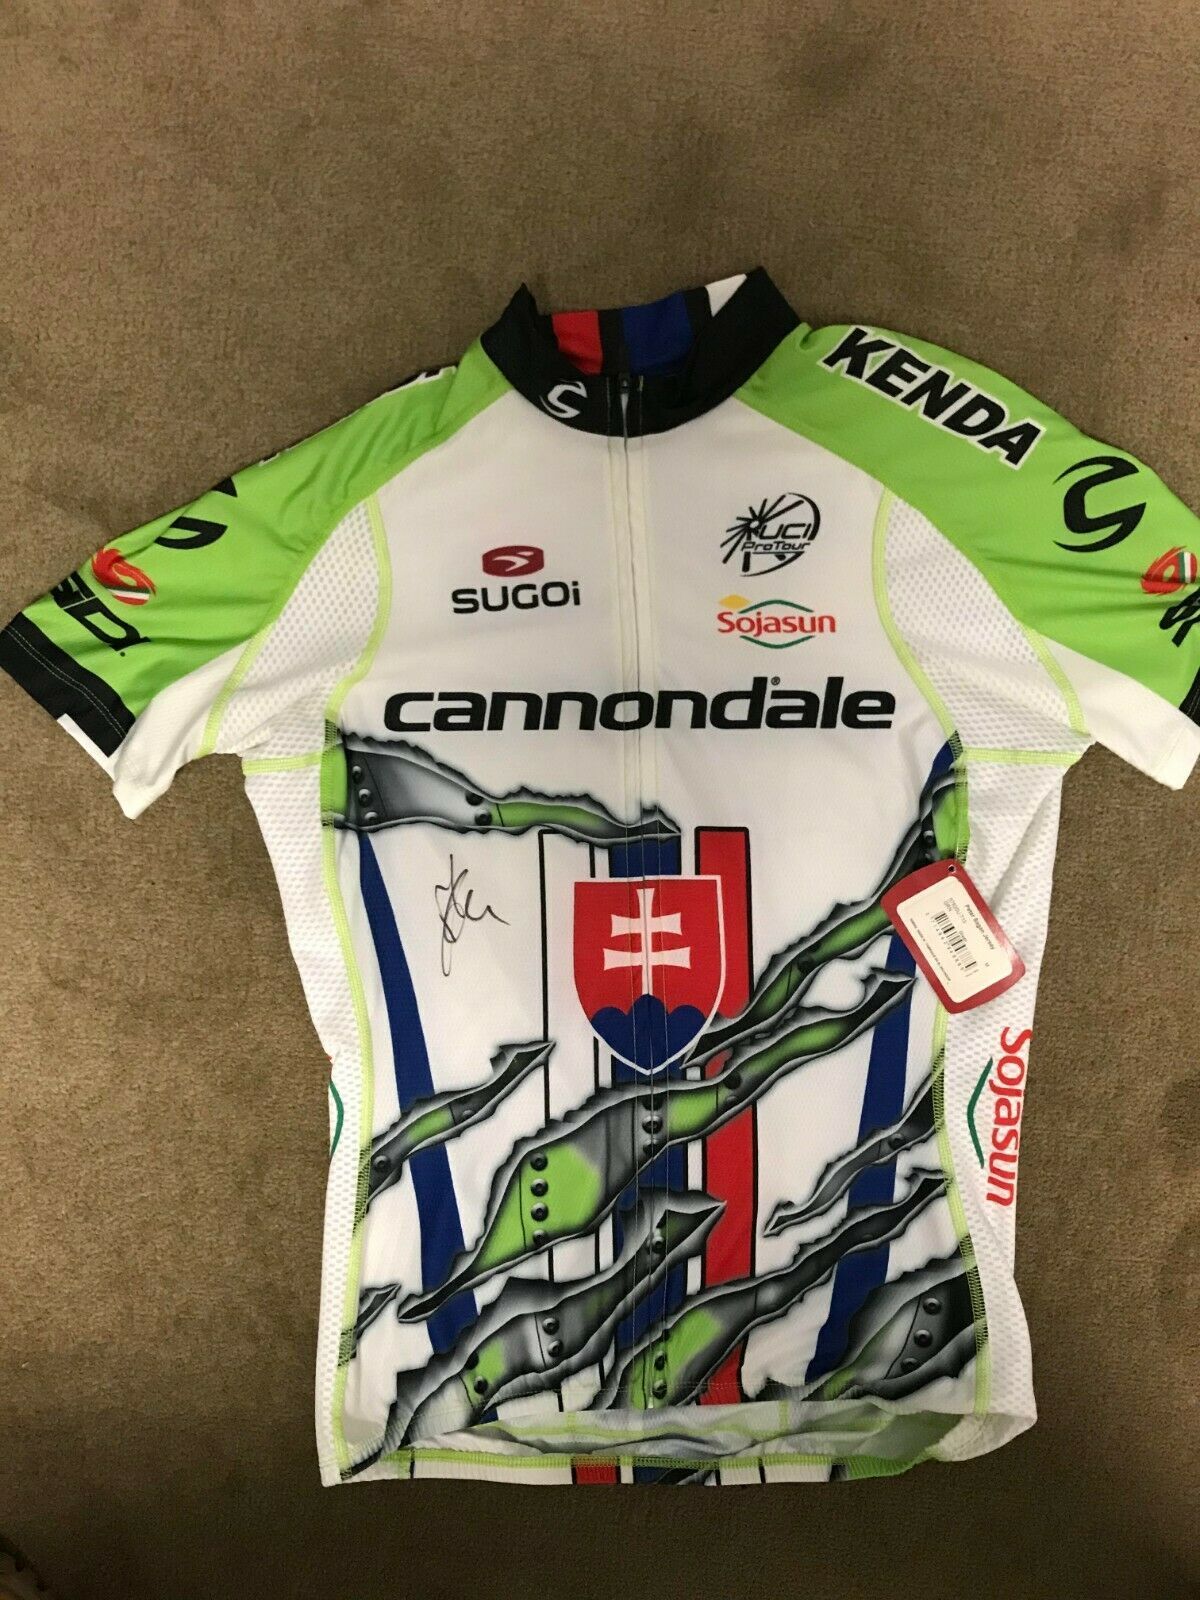 eBay Finds: Signed Peter Sagan 'Hulk' Cannondale jersey | Cyclingnews